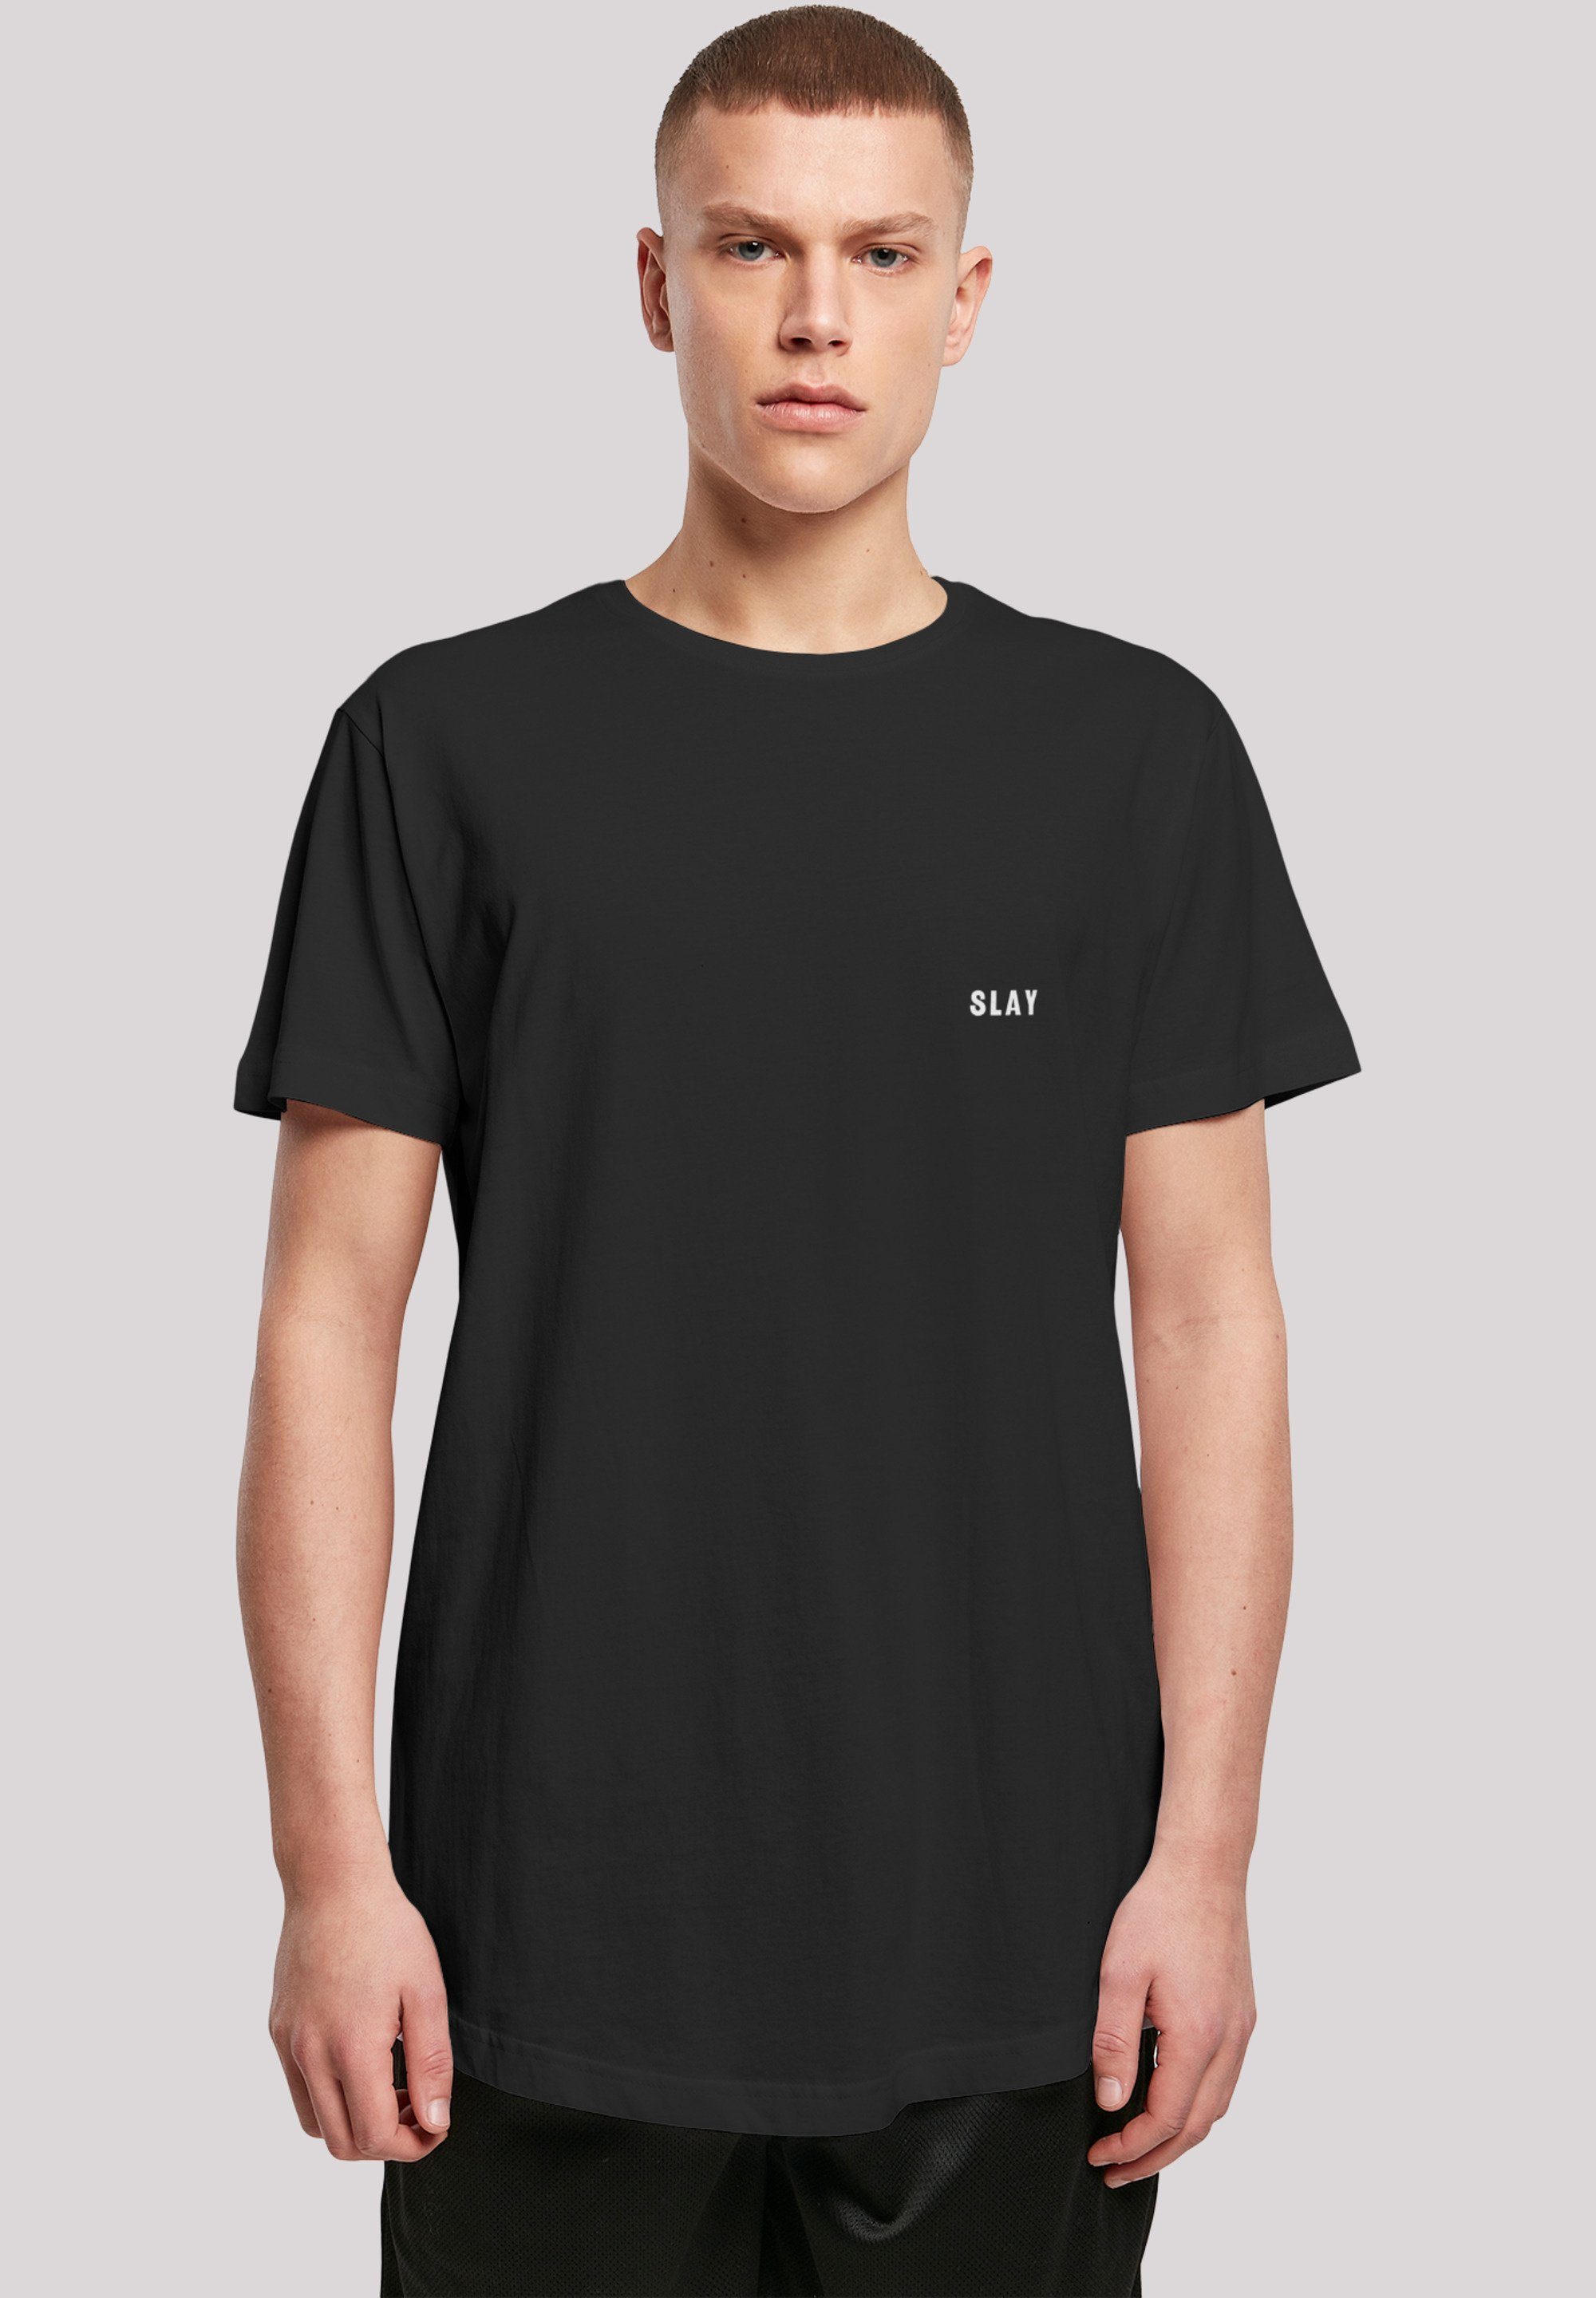 F4NT4STIC T-Shirt Slay Jugendwort 2022, slang, lang geschnitten